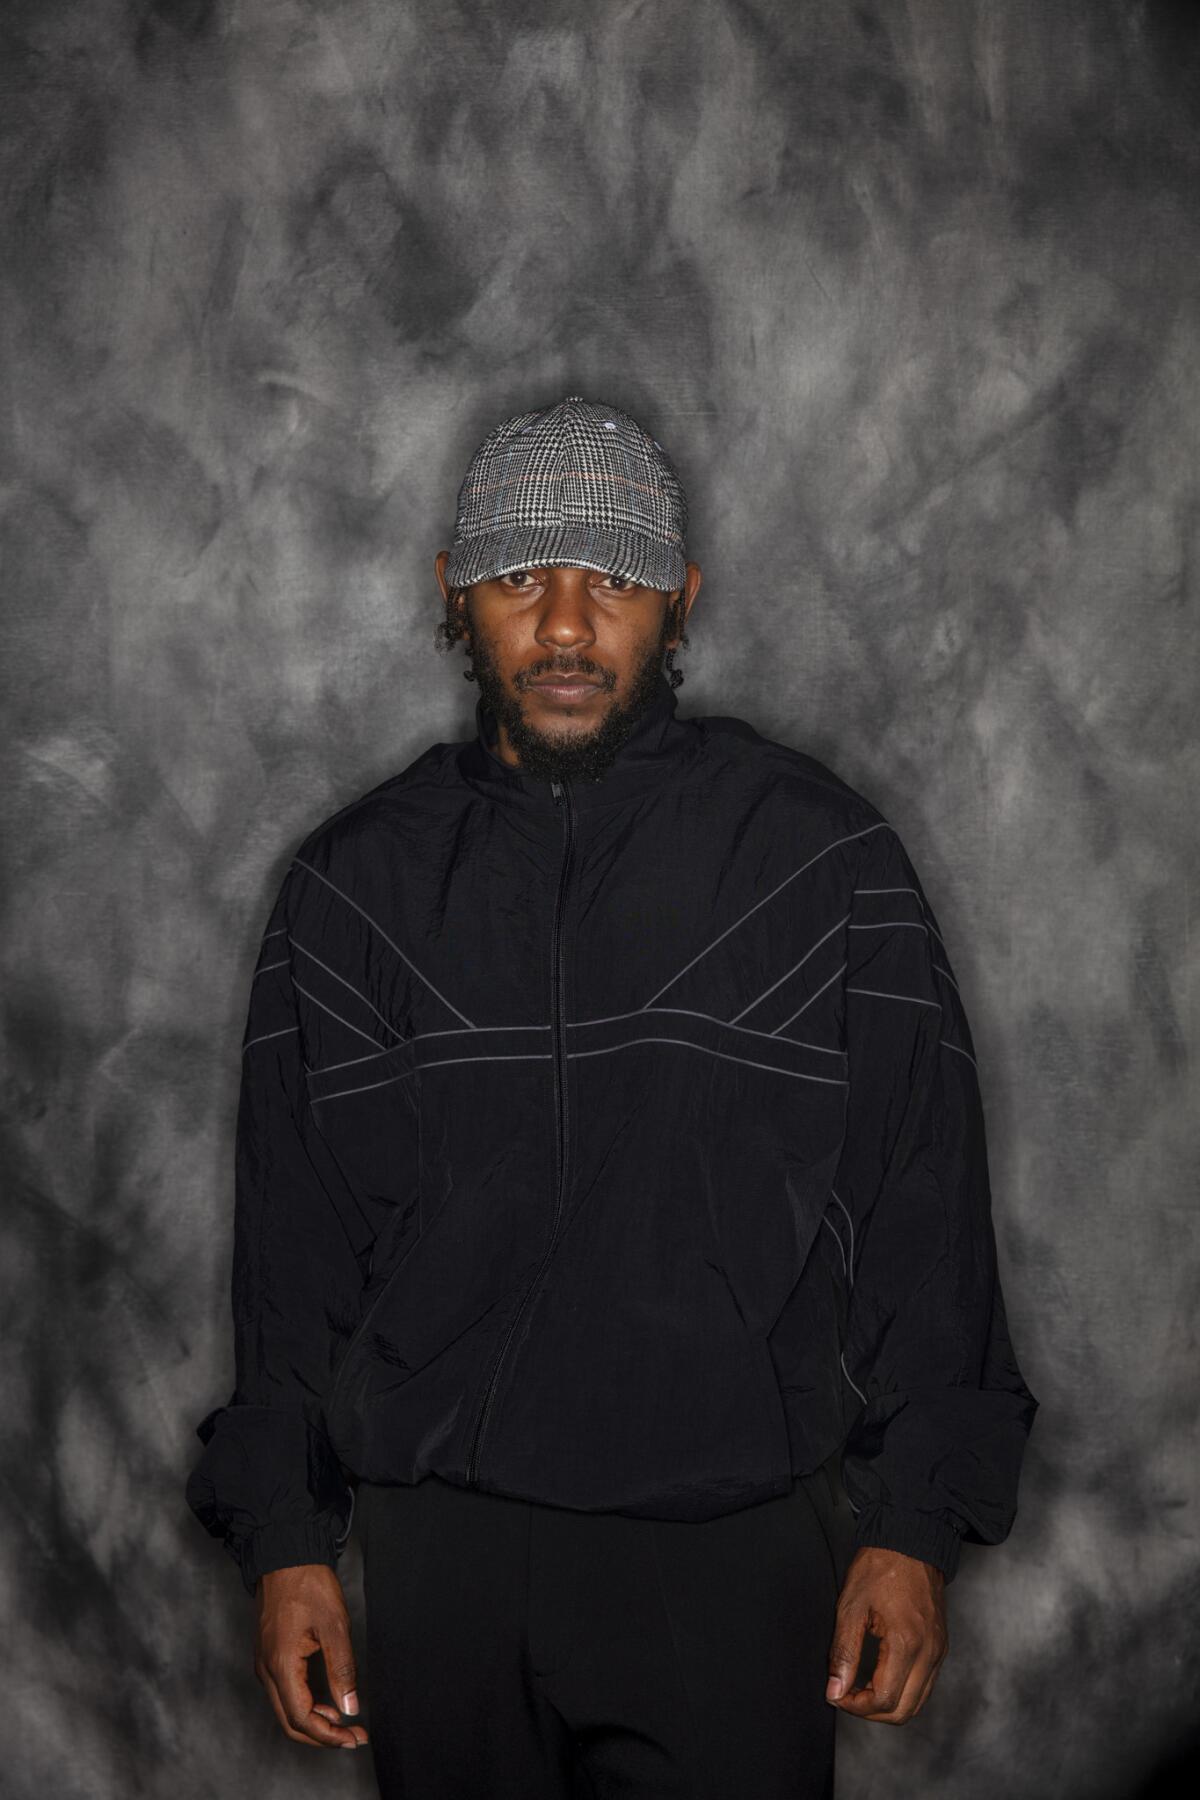 Grammy and Pulitzer Prize-winning hip-hop artist Kendrick Lamar